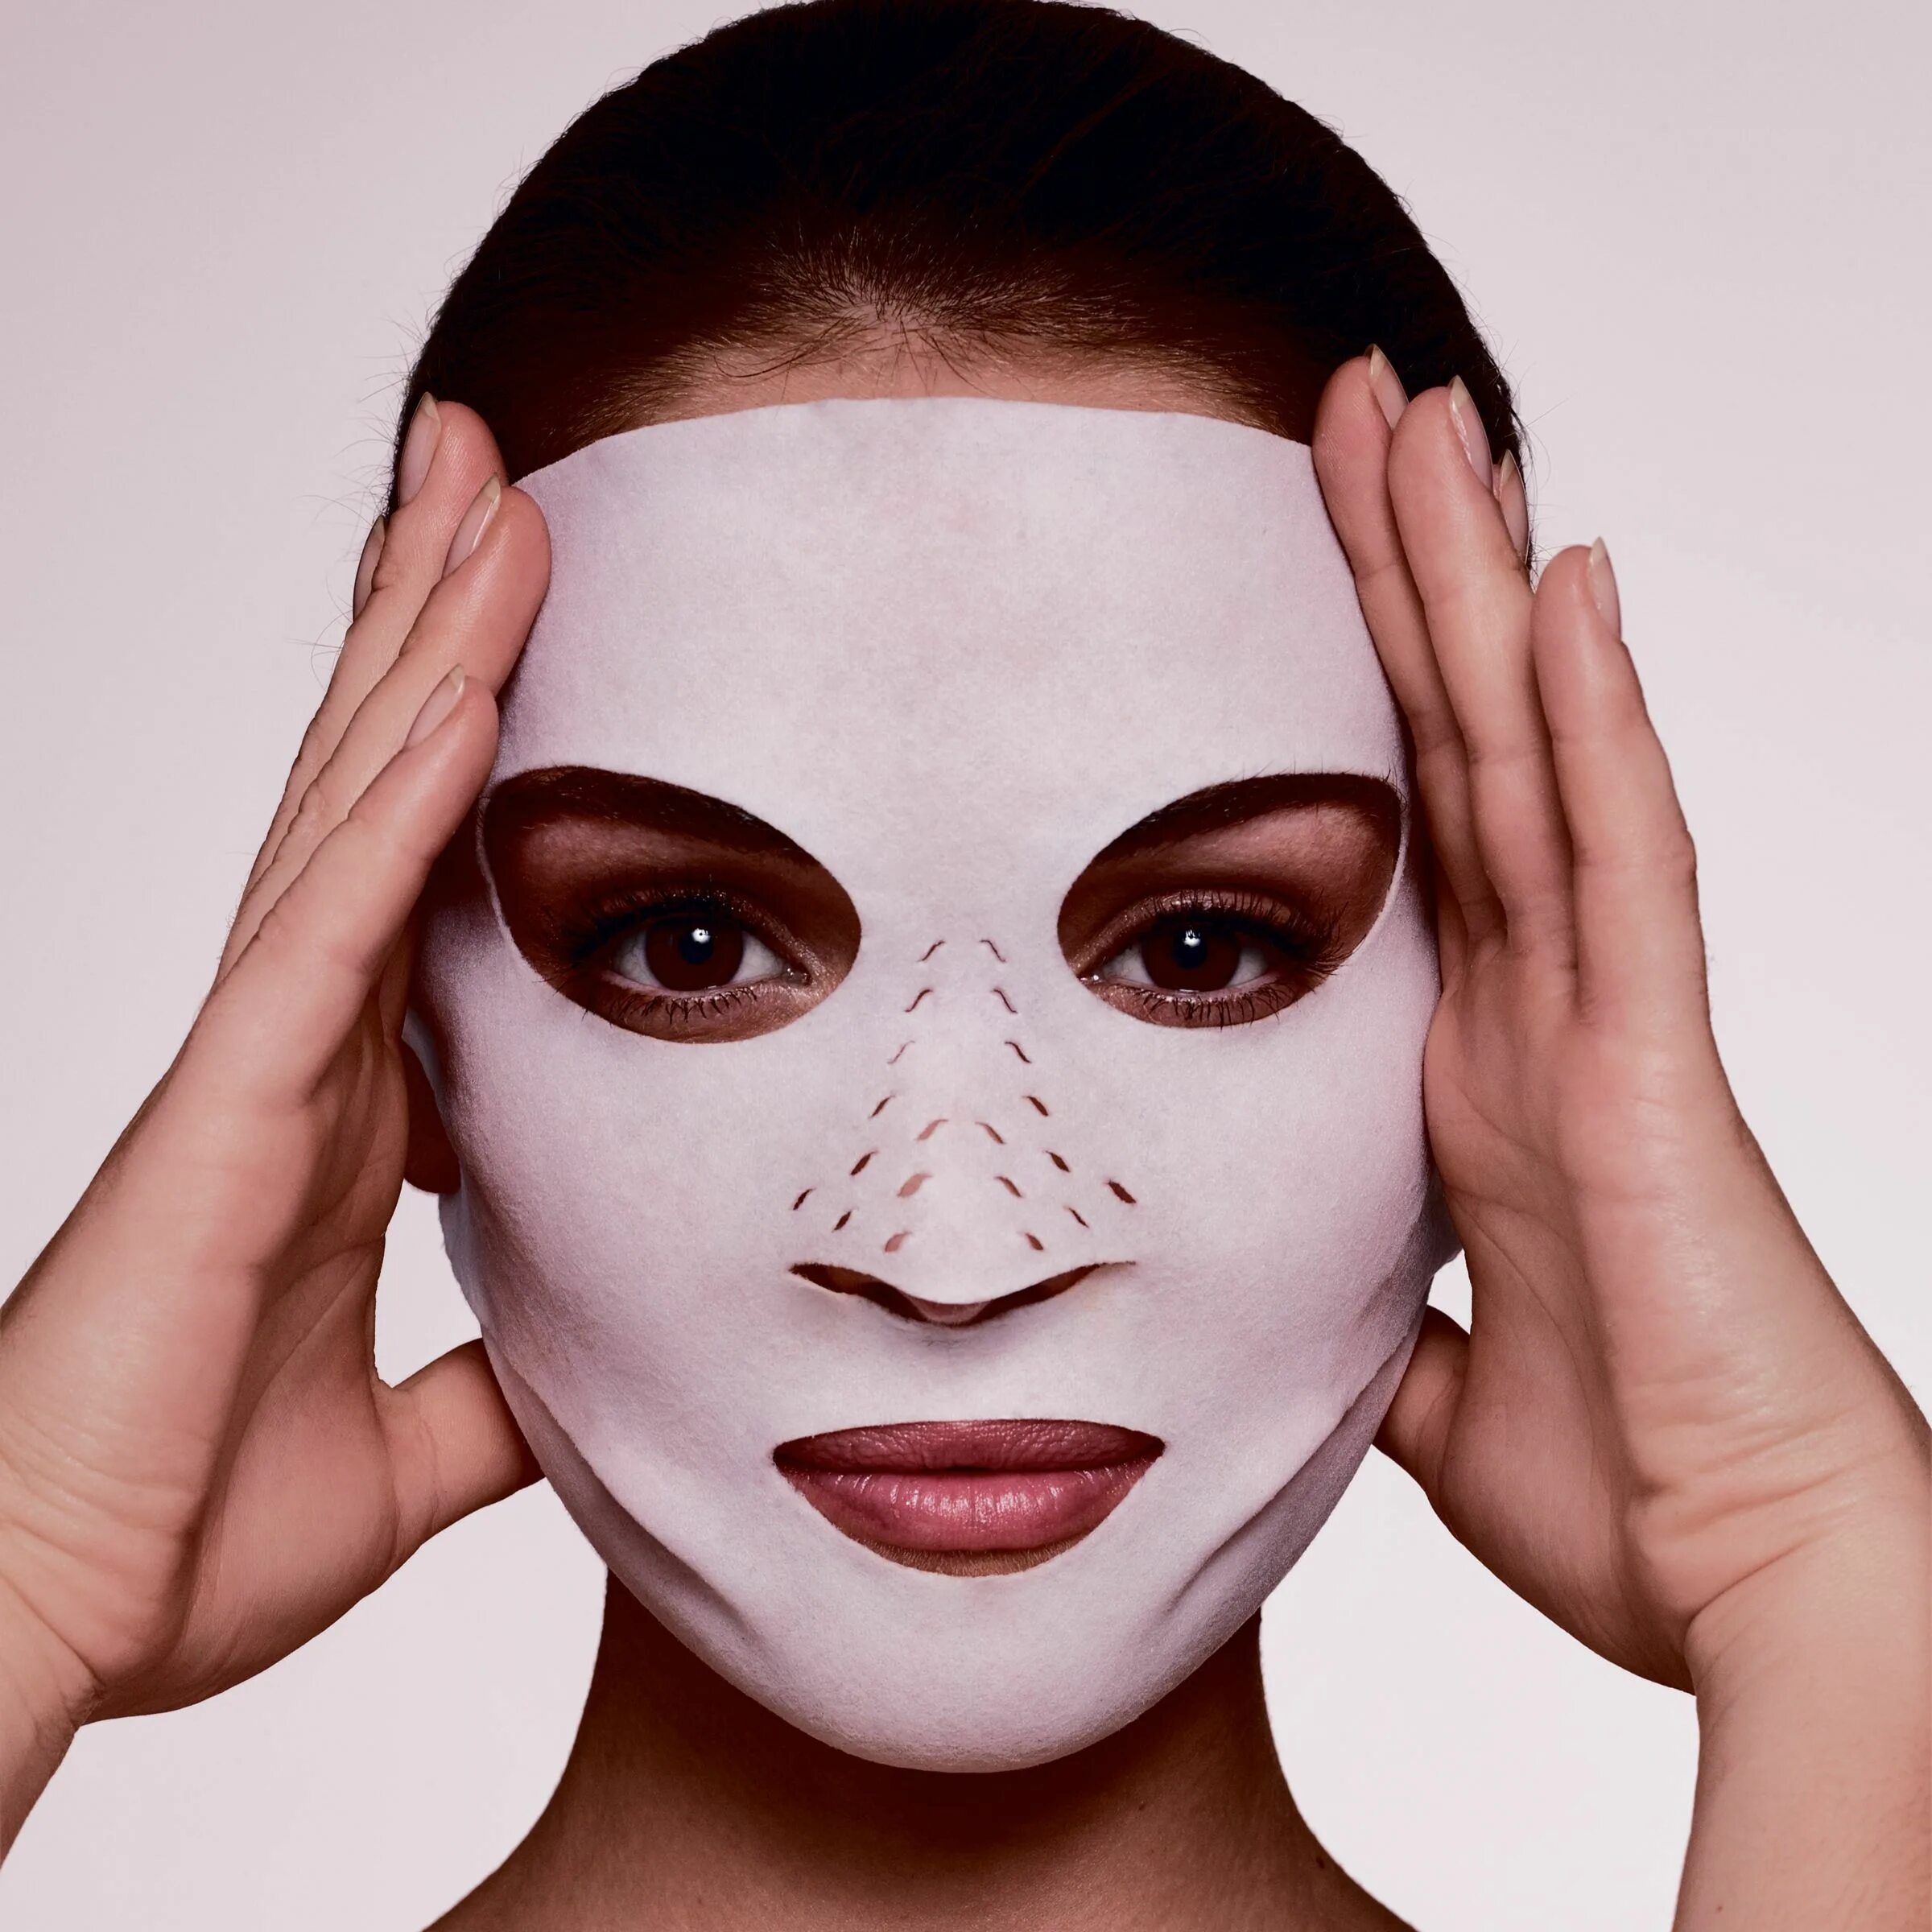 Charlotte Tilbury маска для лица instant Magic Dry Sheet. Девушка с маской на лице. Маска женского лица. Макияж маска.